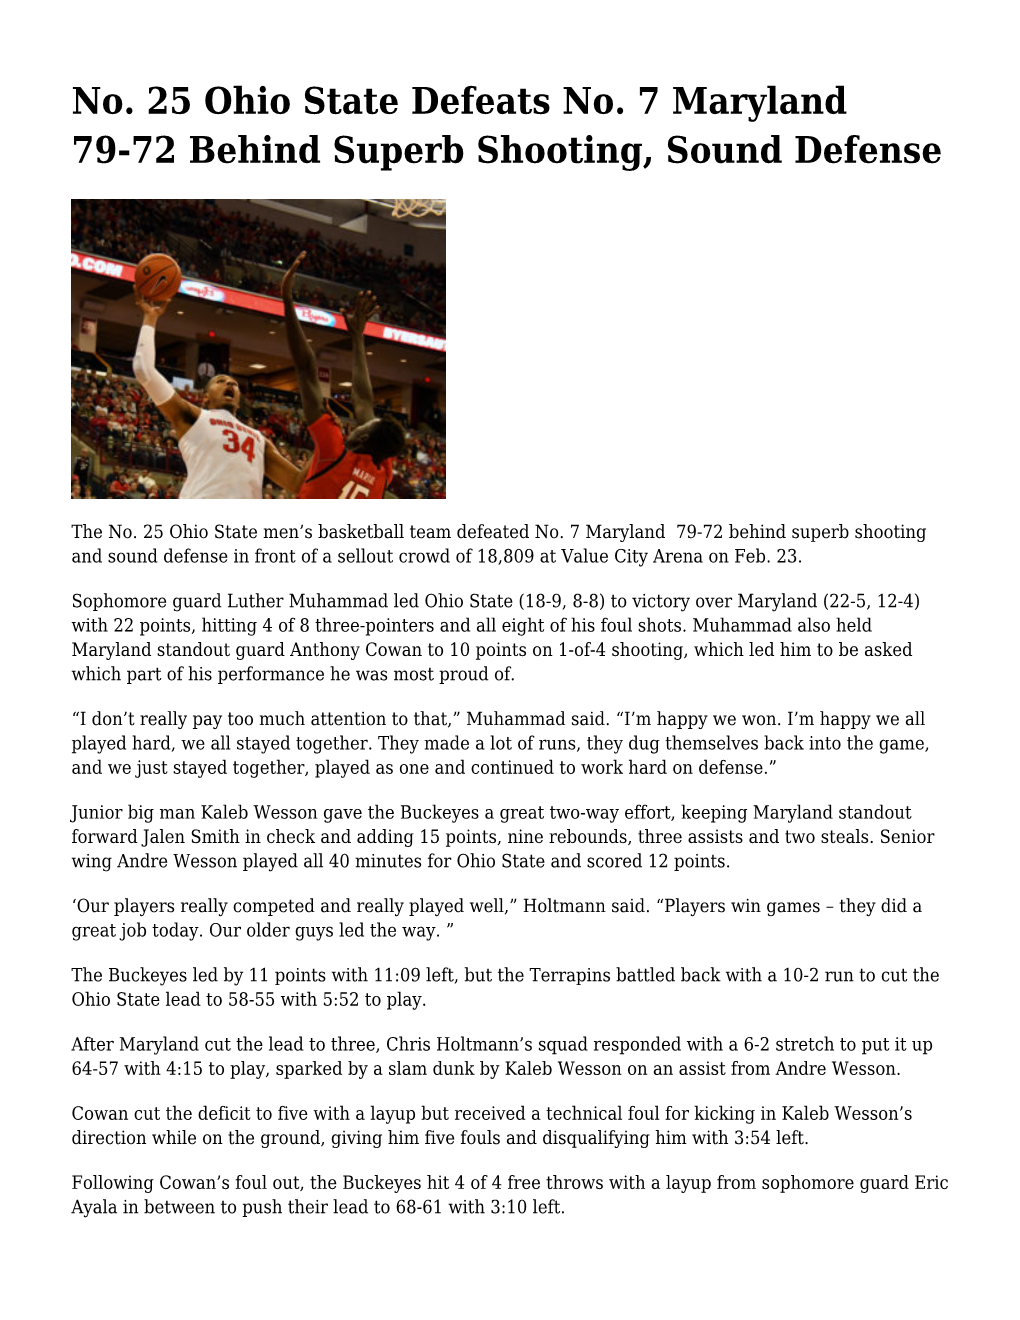 No. 25 Ohio State Defeats No. 7 Maryland 79-72 Behind Superb Shooting, Sound Defense